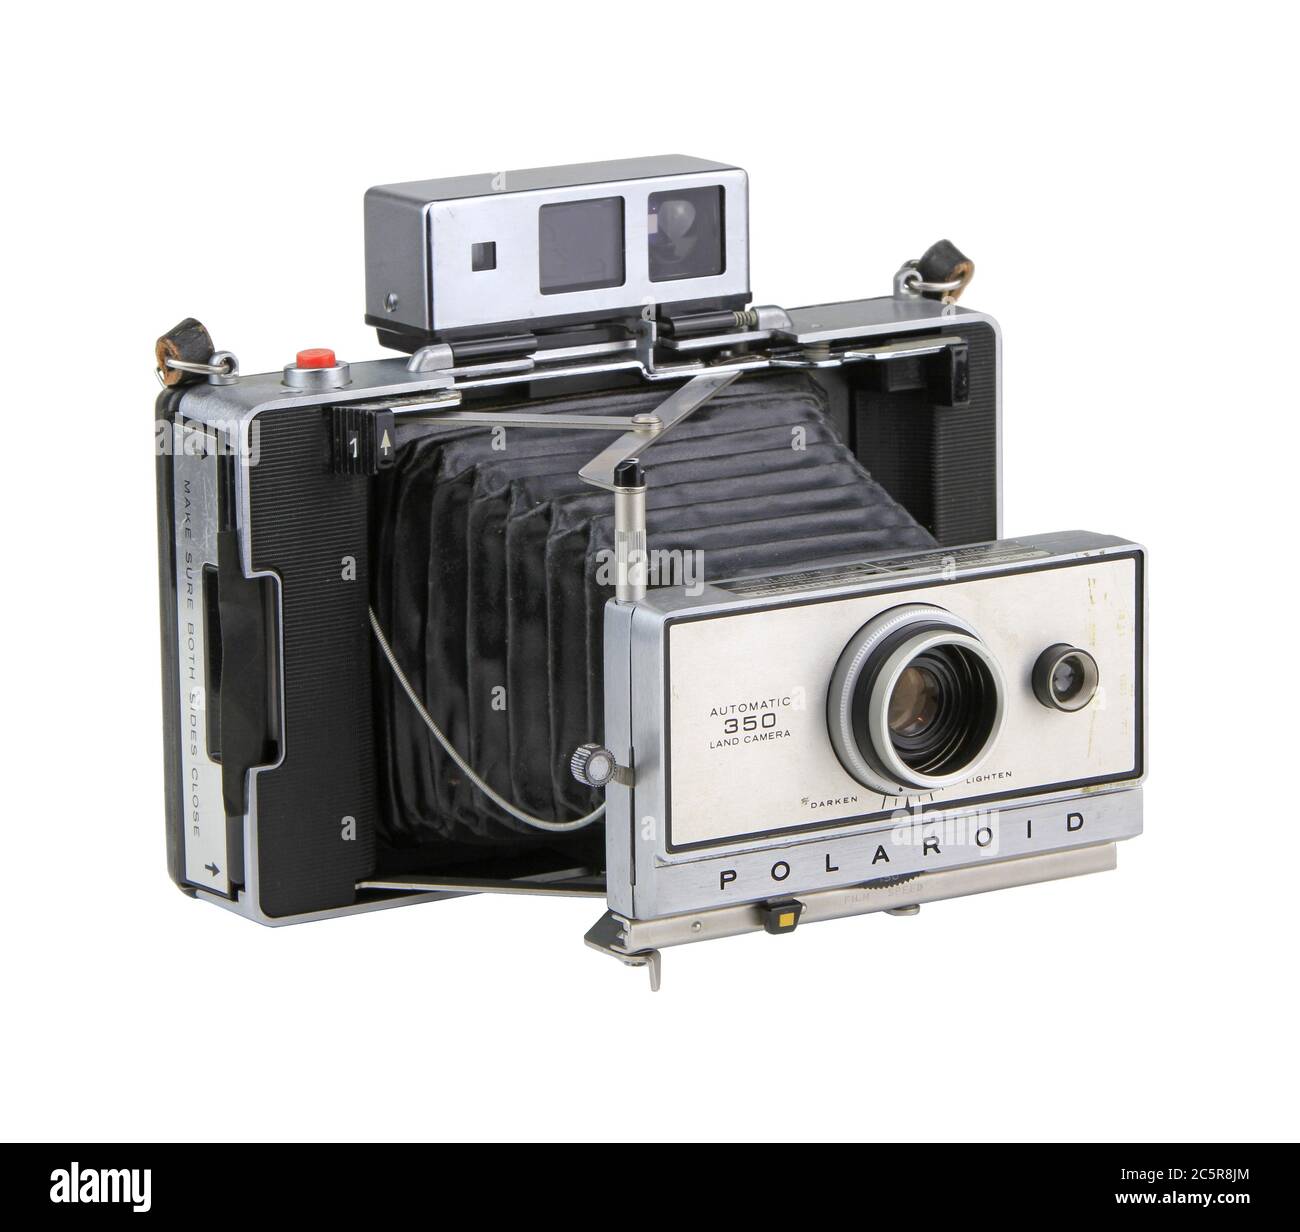 A Polaroid 350 Land Camera on a white background Stock Photo - Alamy